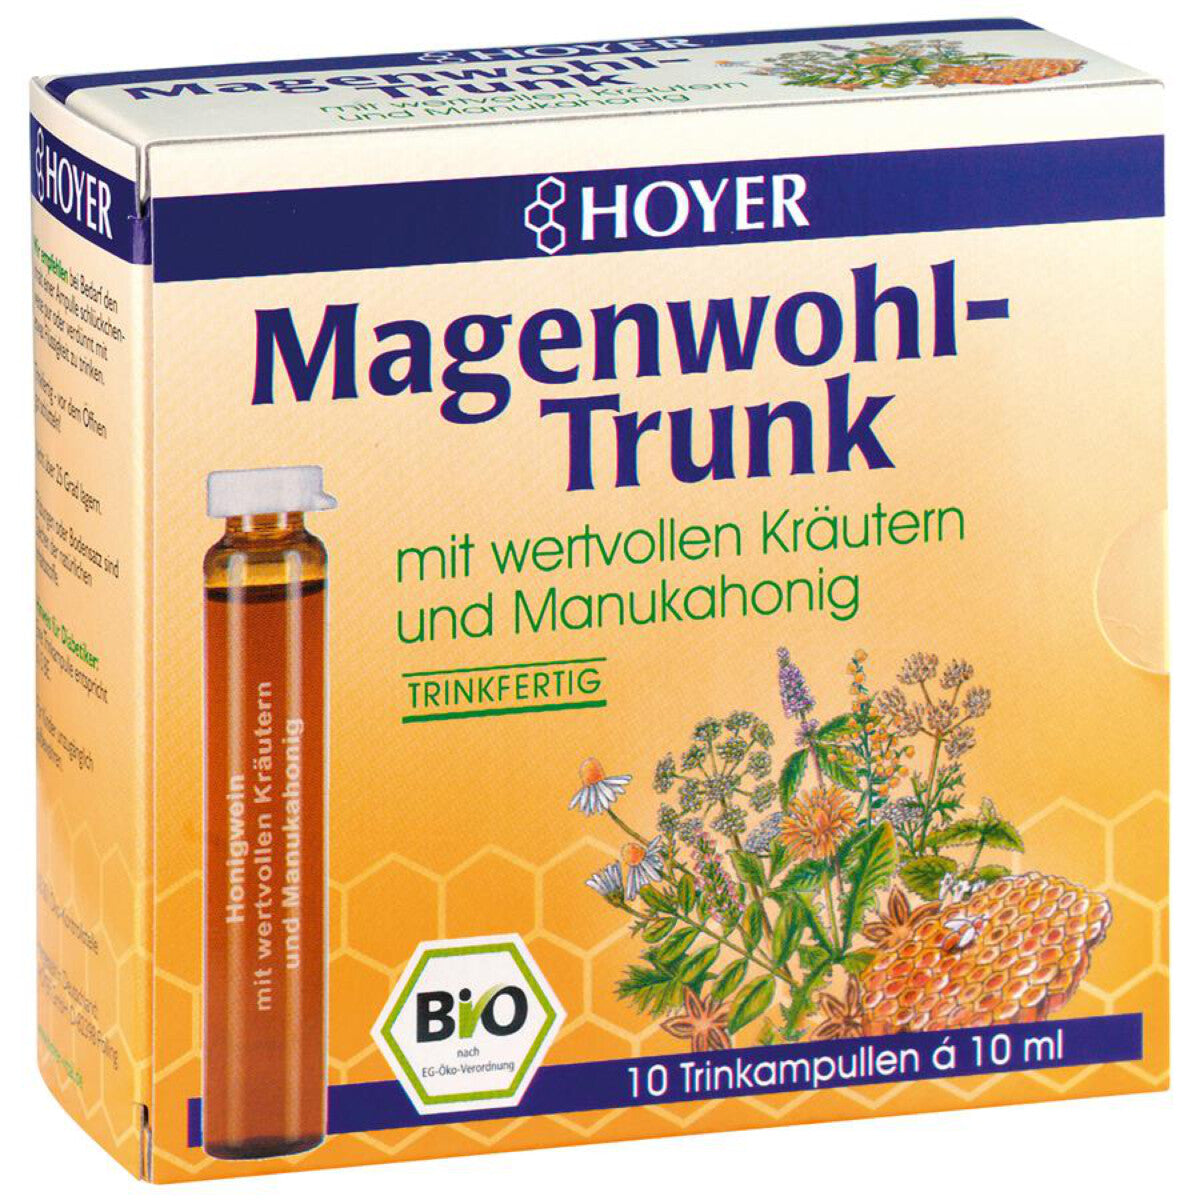 HOYER Magenwohl-Trunk - 100 ml